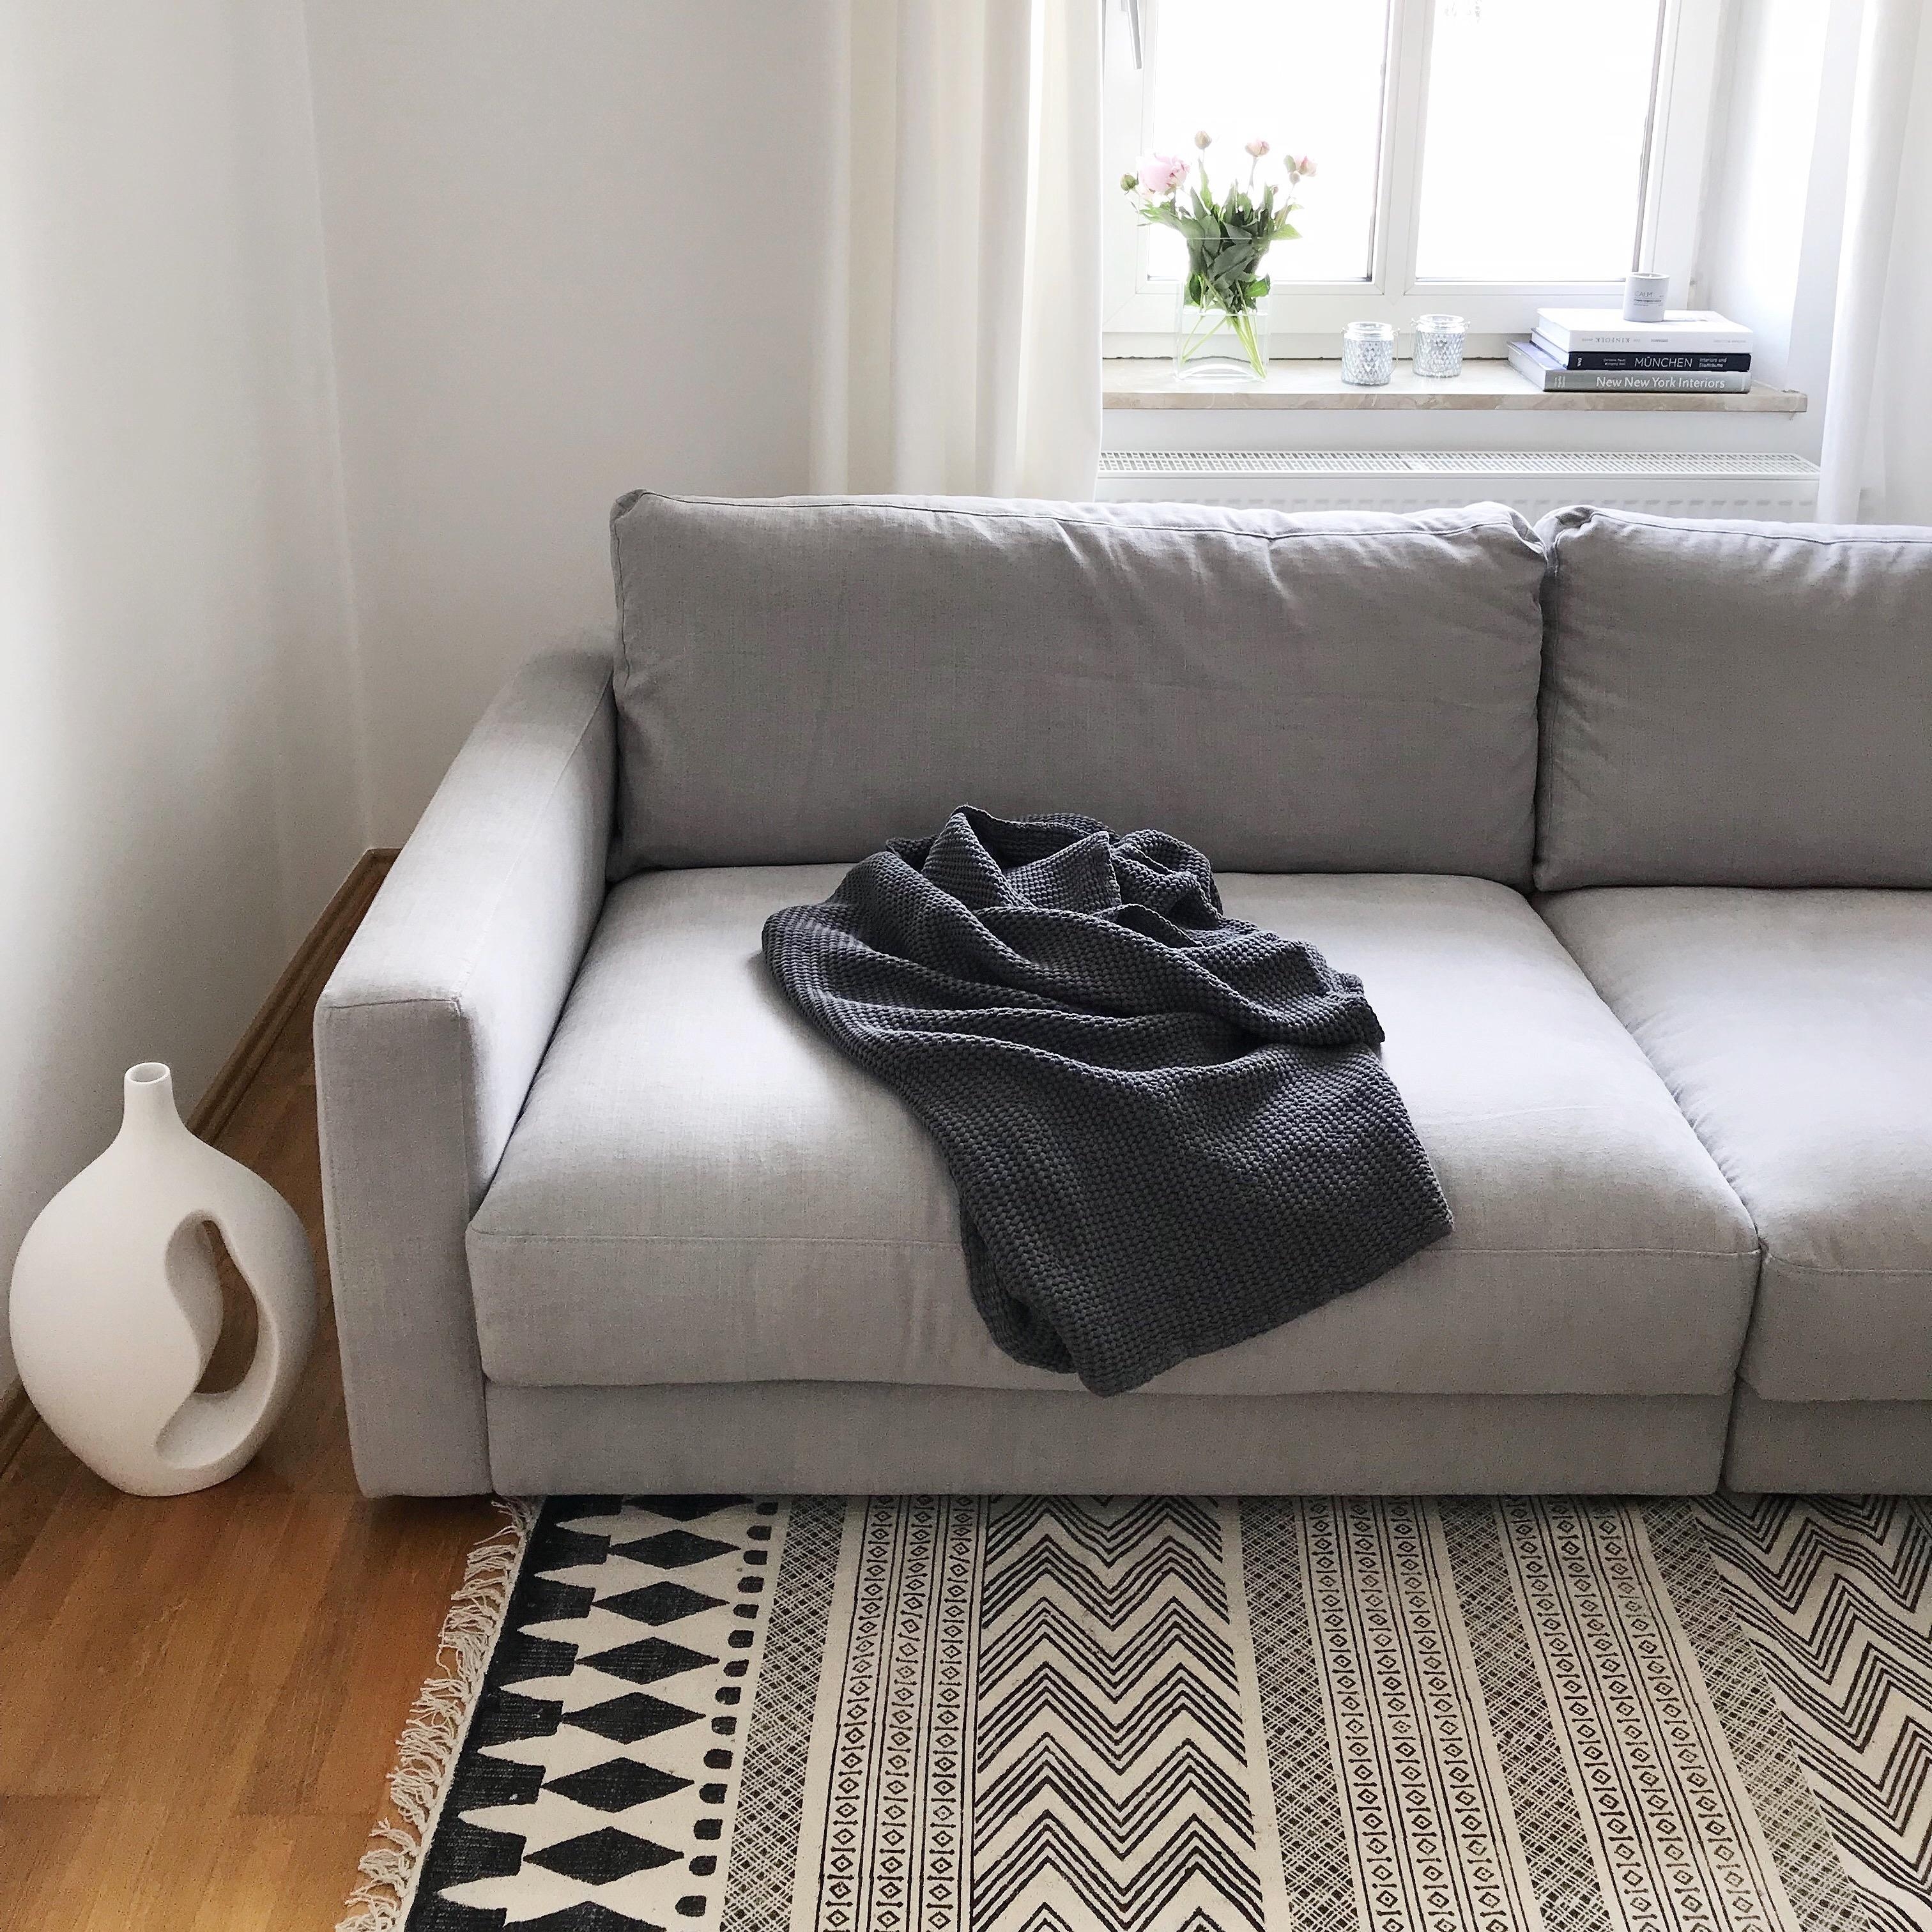 Unser neues Traumsofa 😍
#sofa #couchstyle #scandinavianhome #slowliving #minimalism #nordichome 